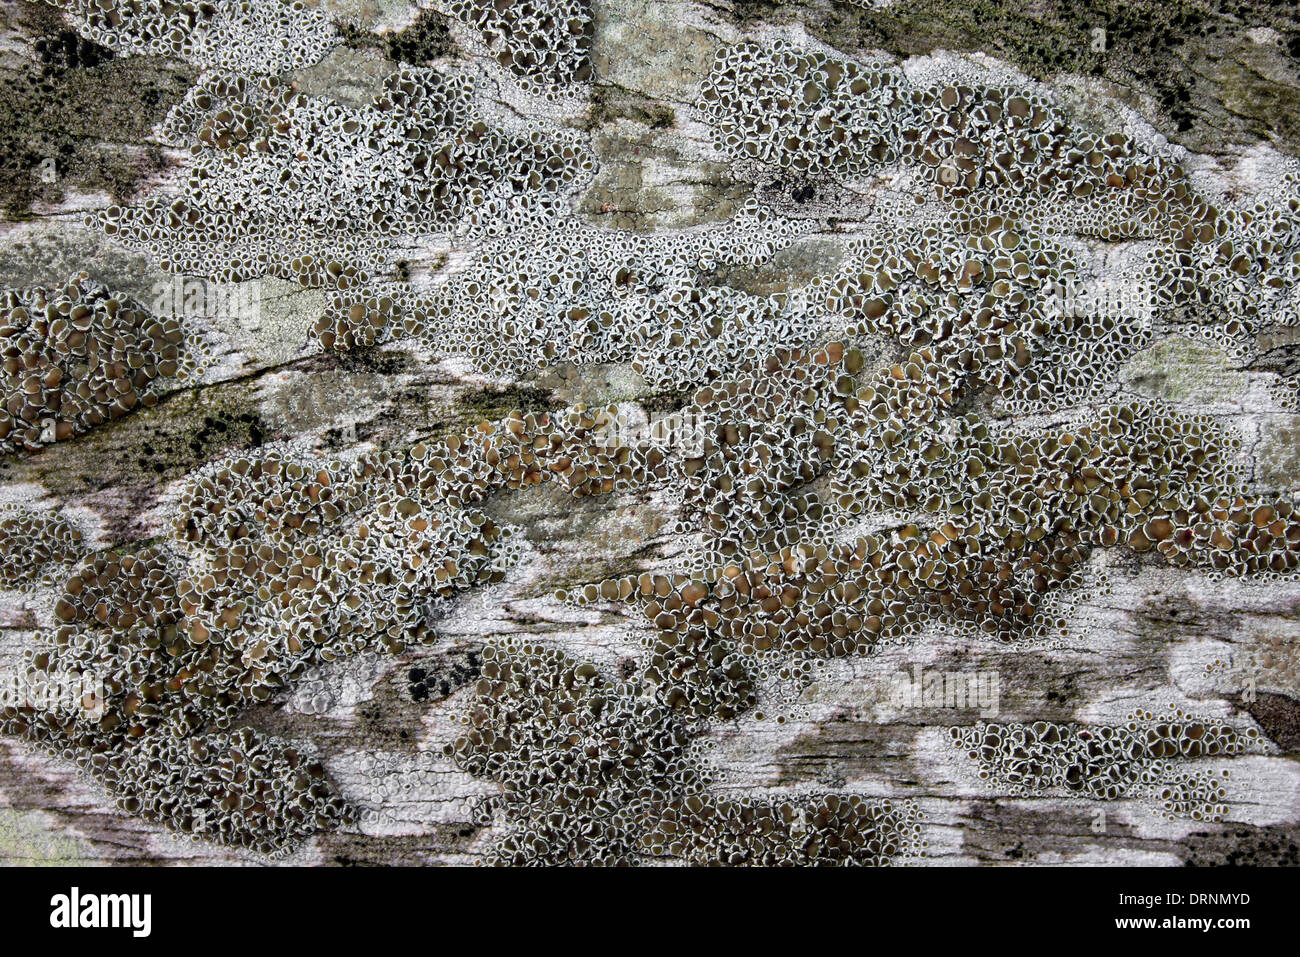 Crustose Lichen Lecanora species on Wood Stock Photo